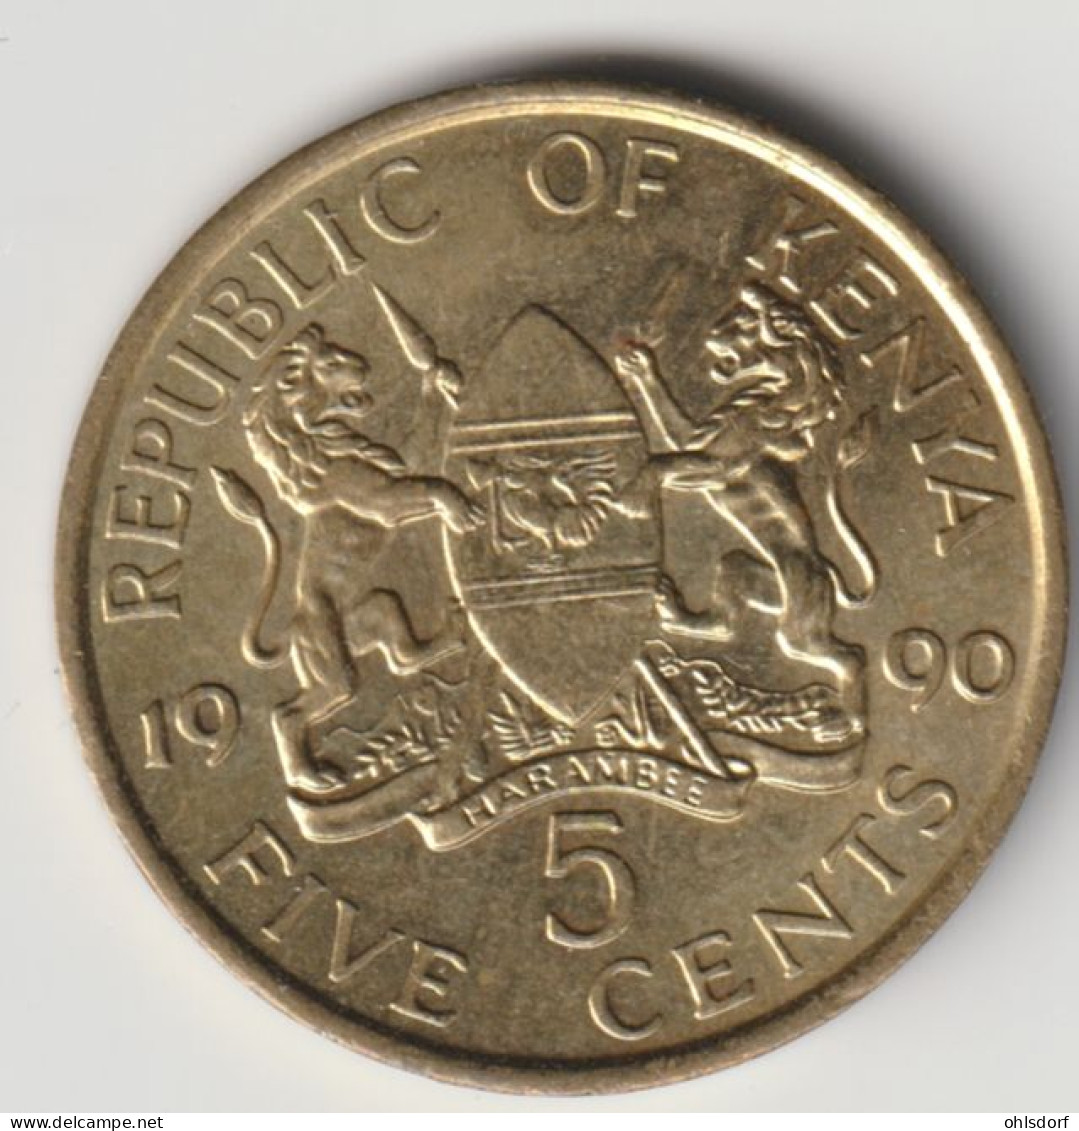 KENYA 1990: 5 Cents, KM 17 - Kenya